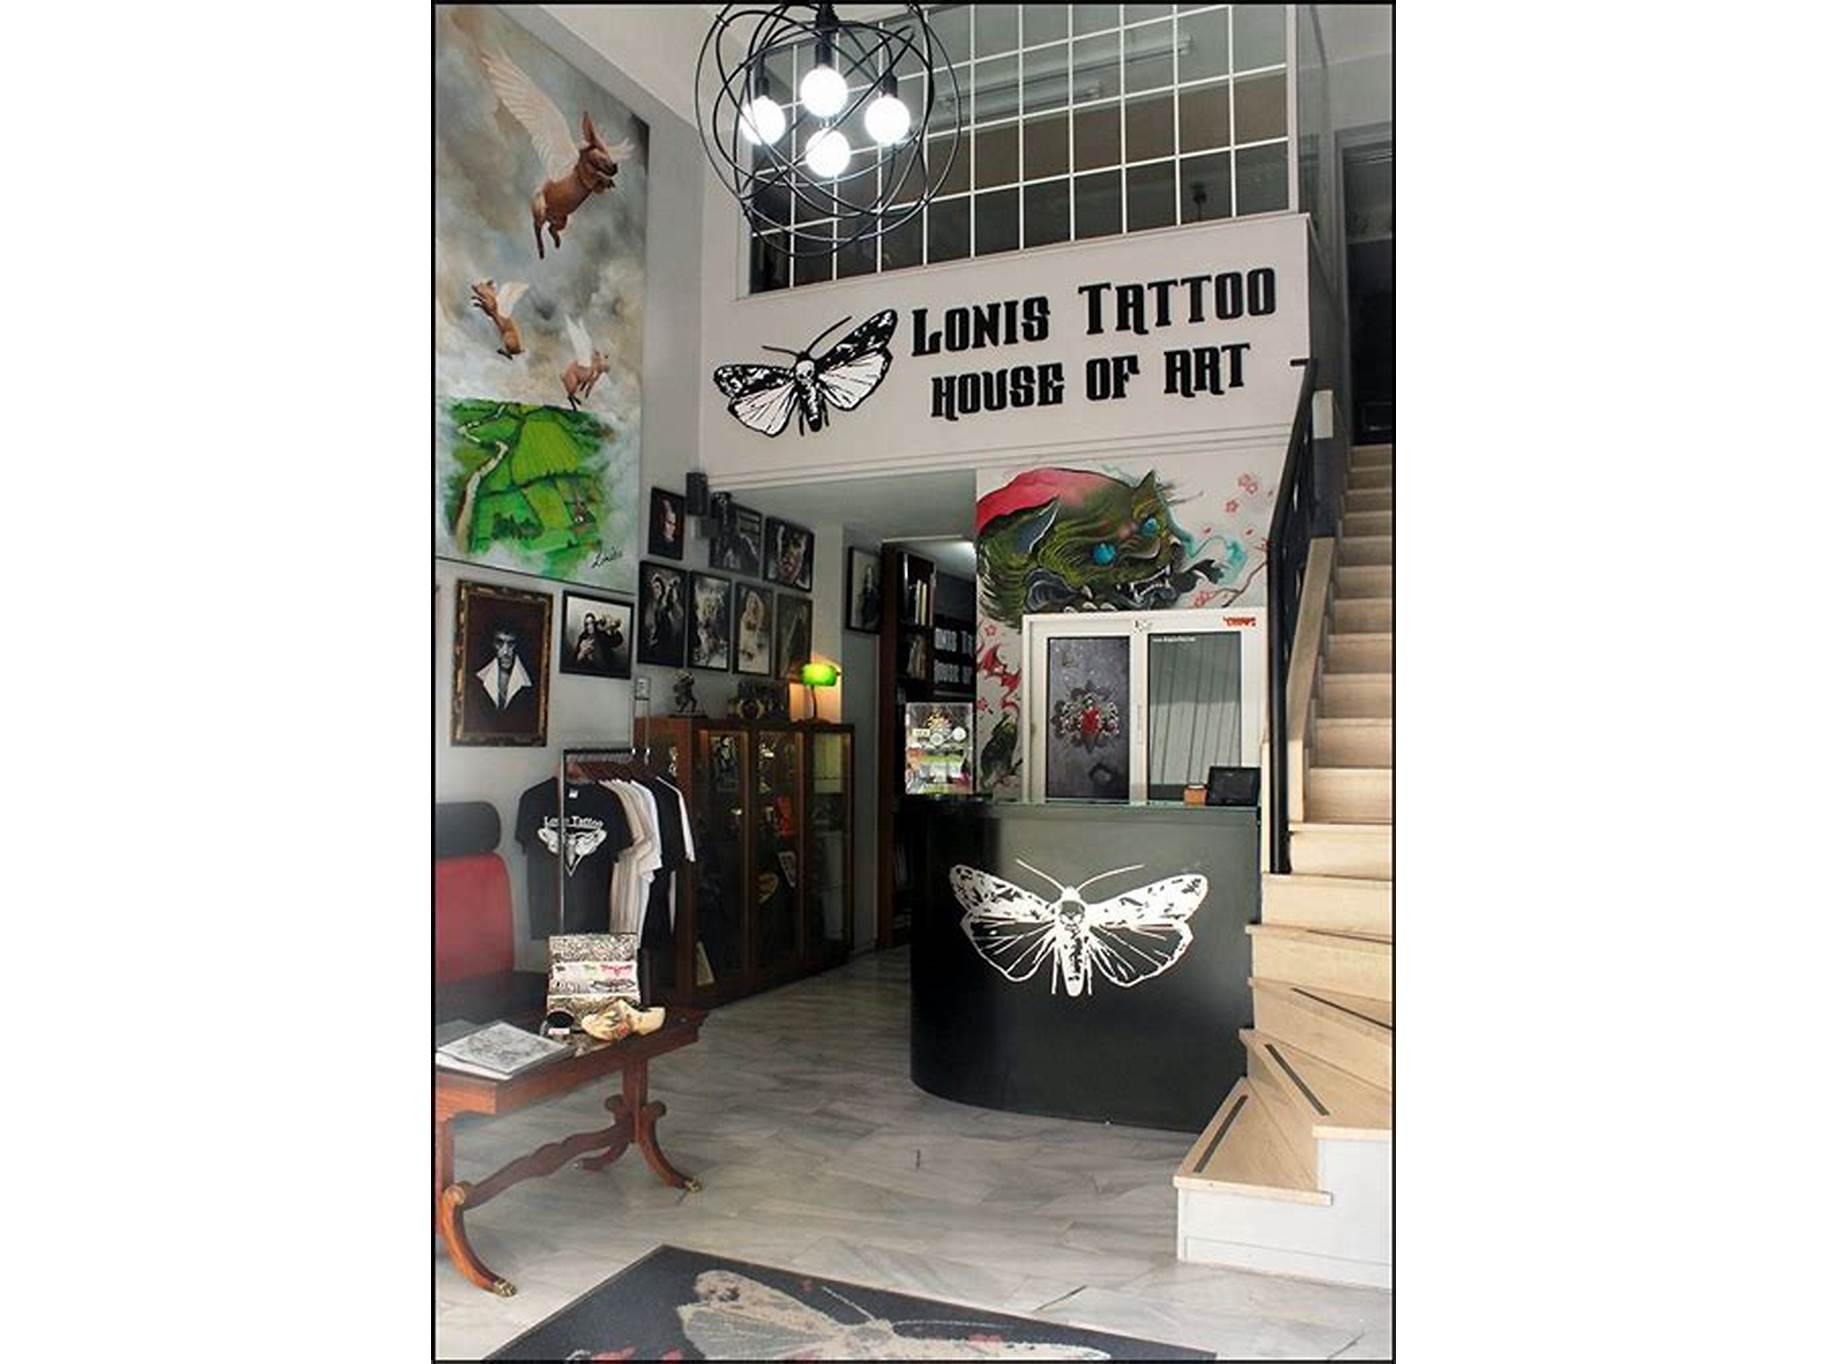 Showcasing Tattoo Designs in Tattoo Shop Interior Design